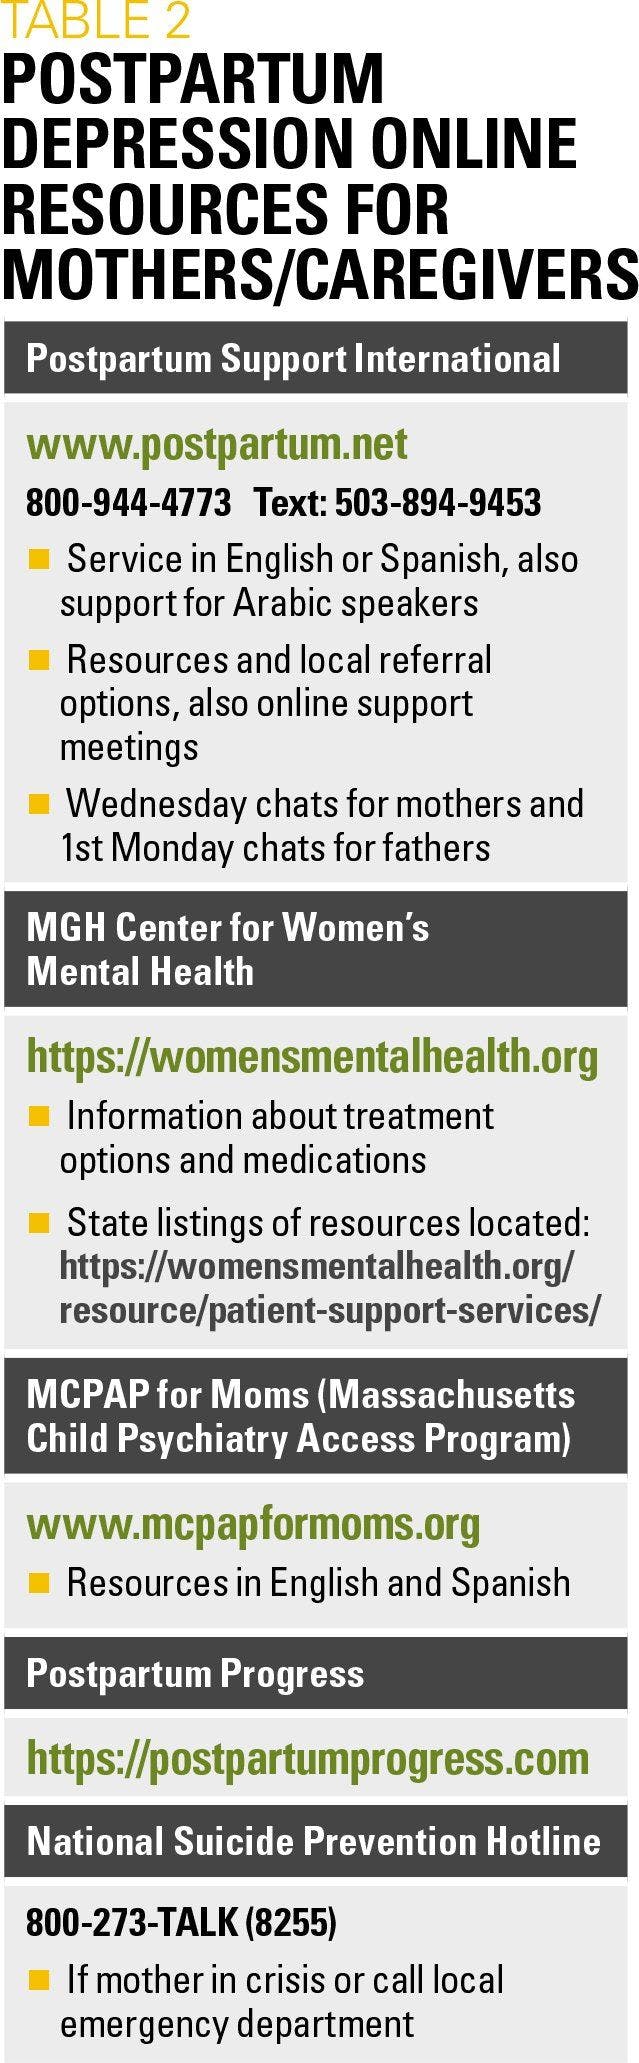 Postpartum depression online resources for mothers/caregivers